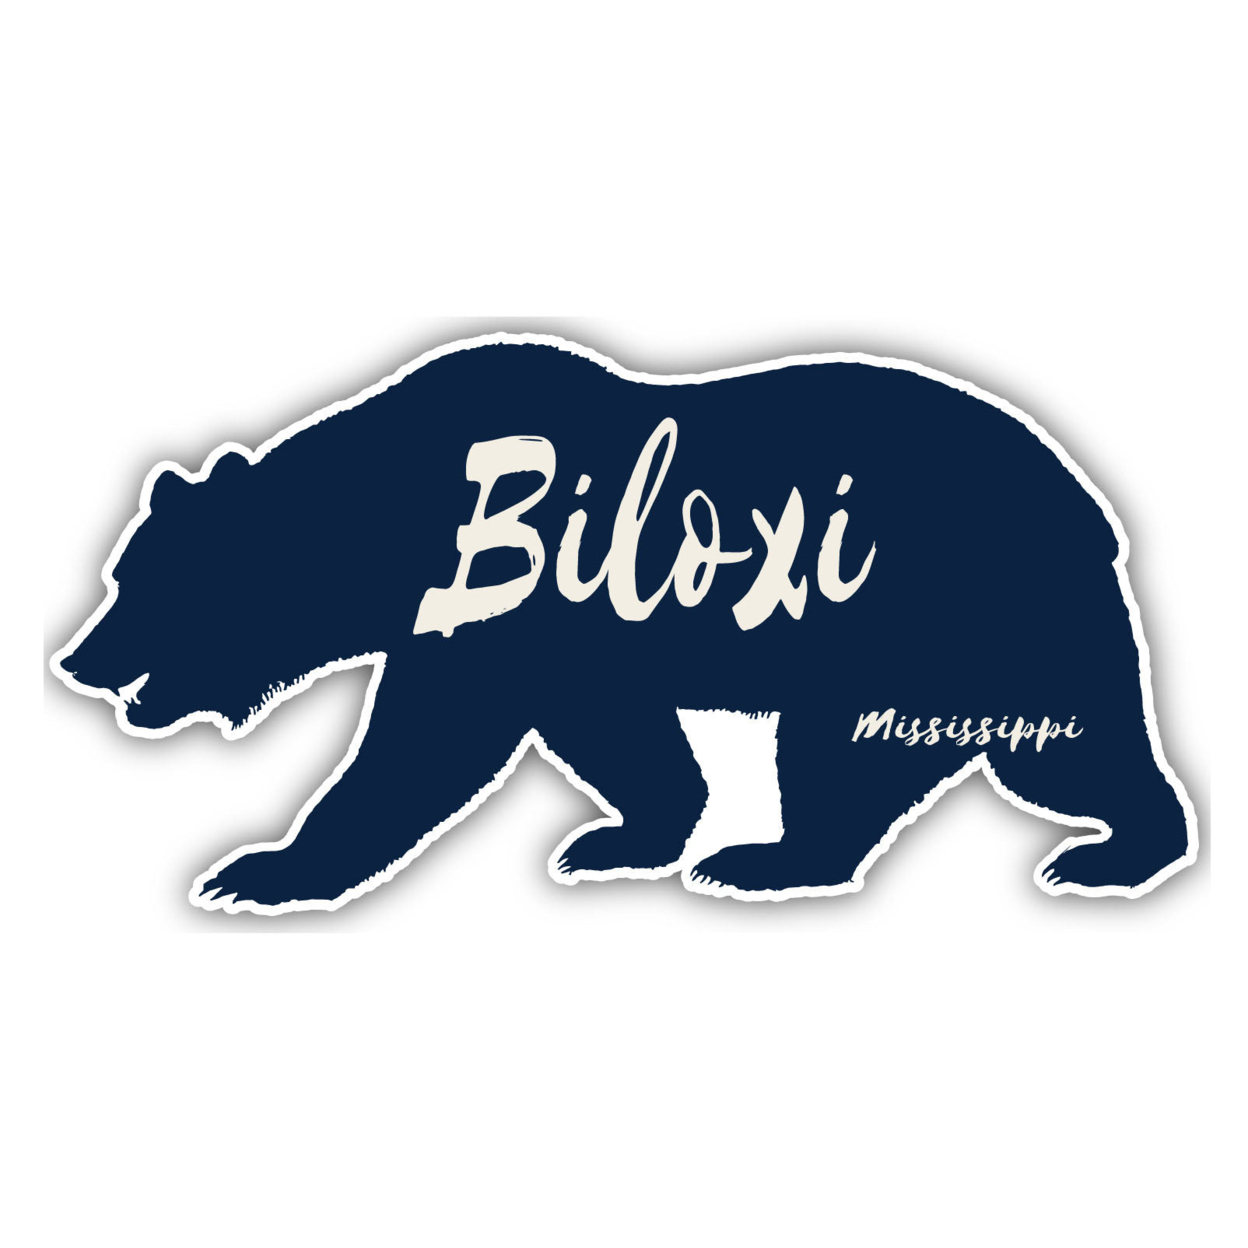 Biloxi Mississippi Souvenir Decorative Stickers (Choose Theme And Size) - Single Unit, 12-Inch, Tent